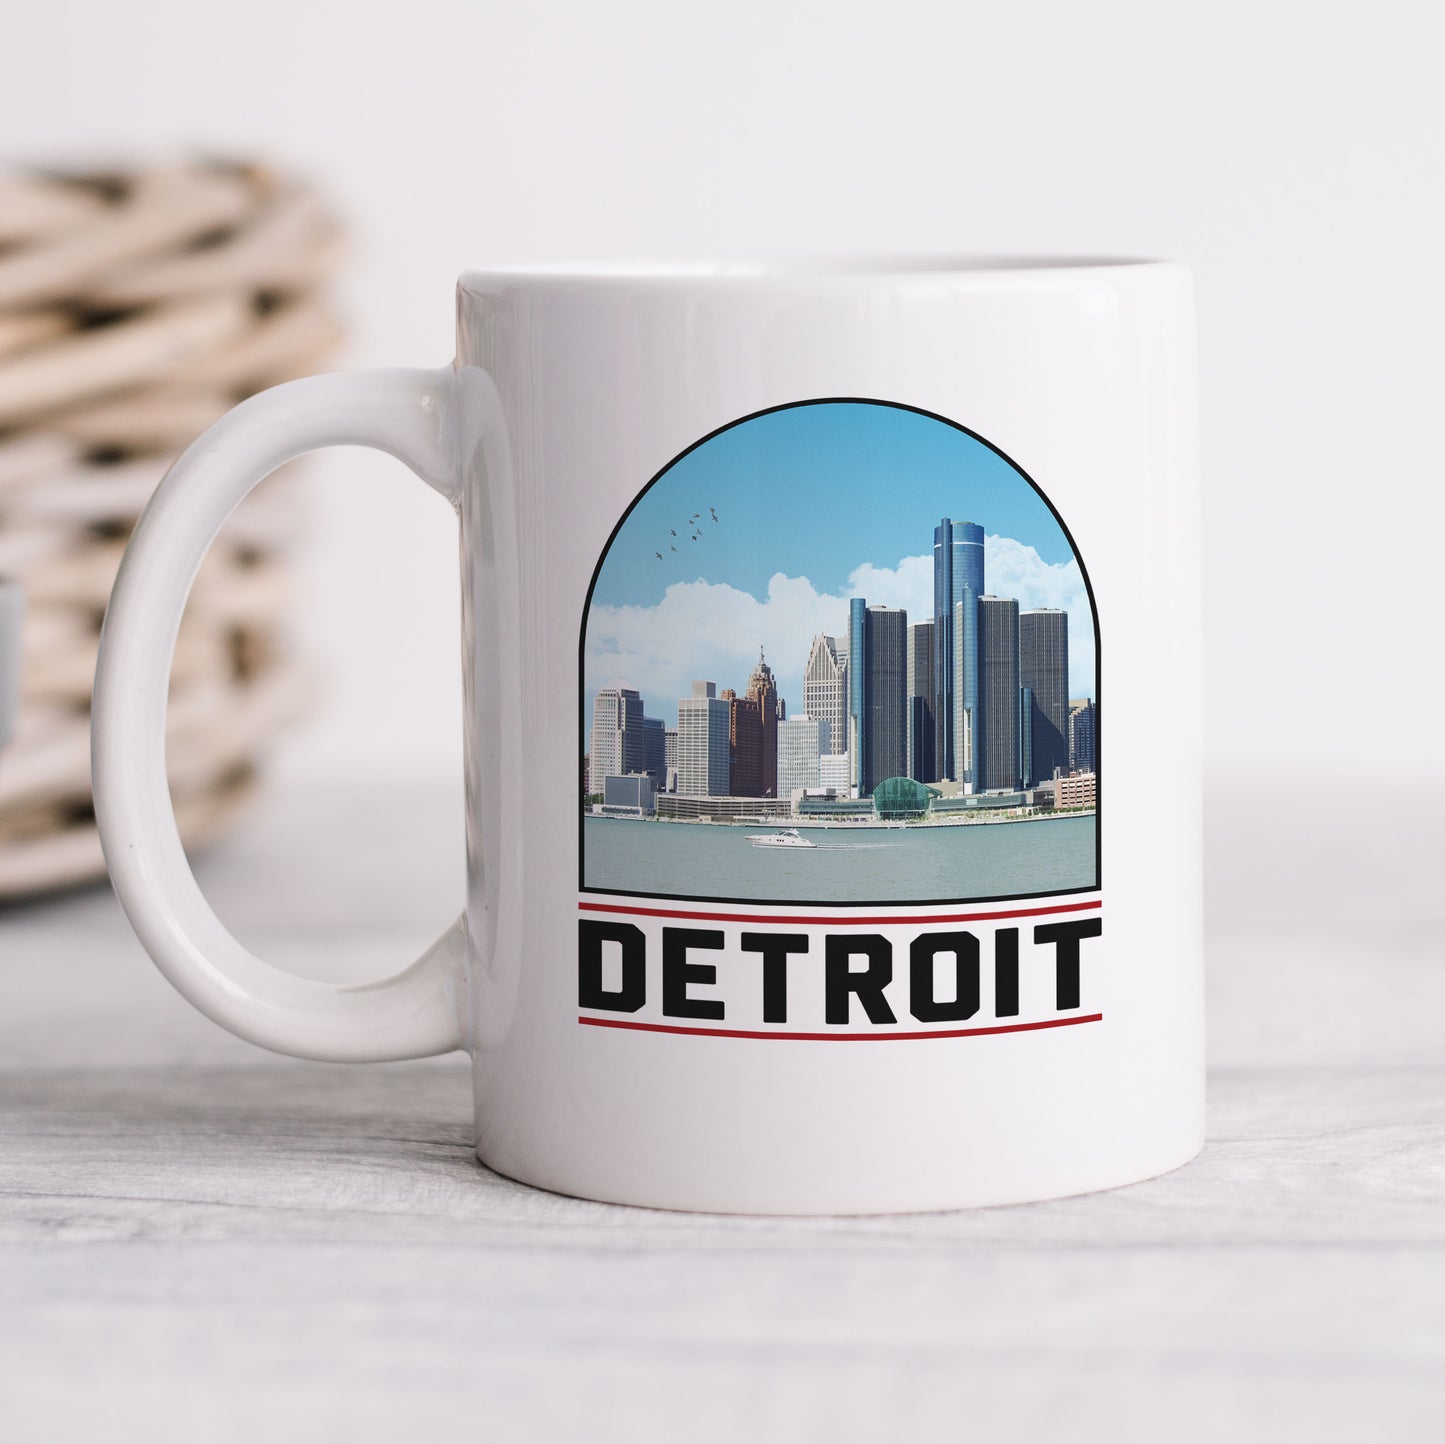 Detroit - Ceramic Mug - Vintaprints